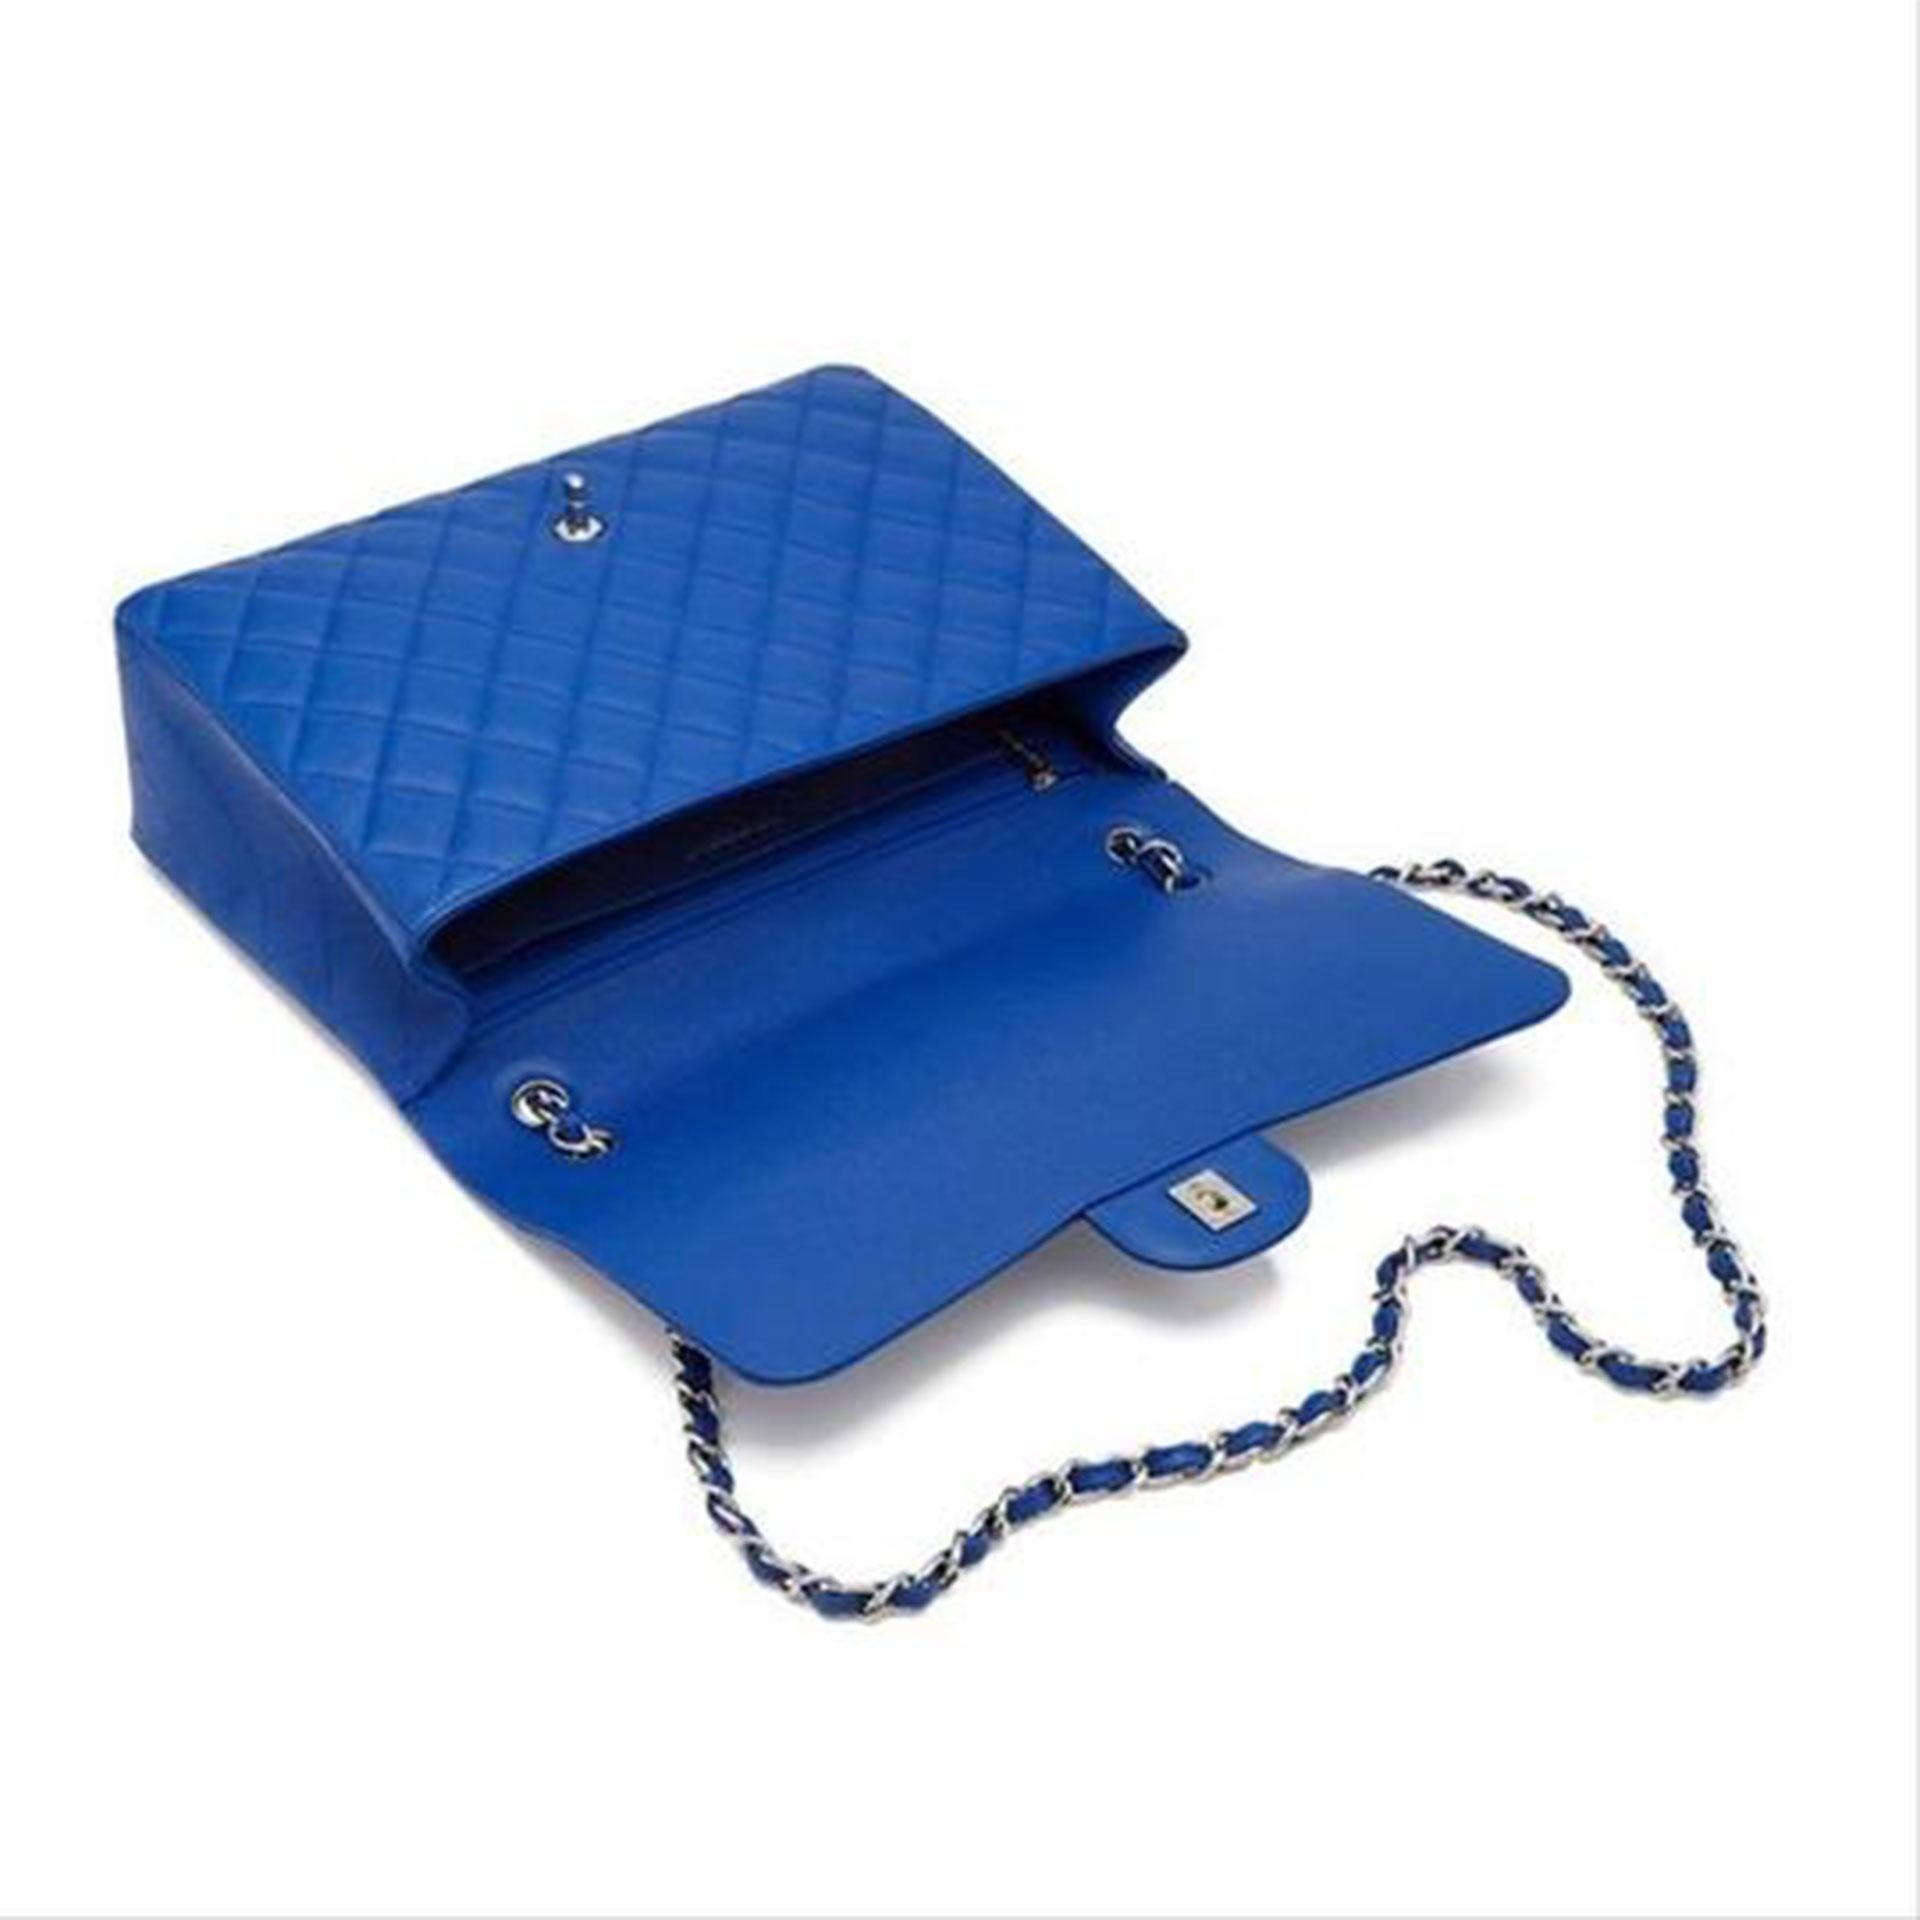 blue chanel bag